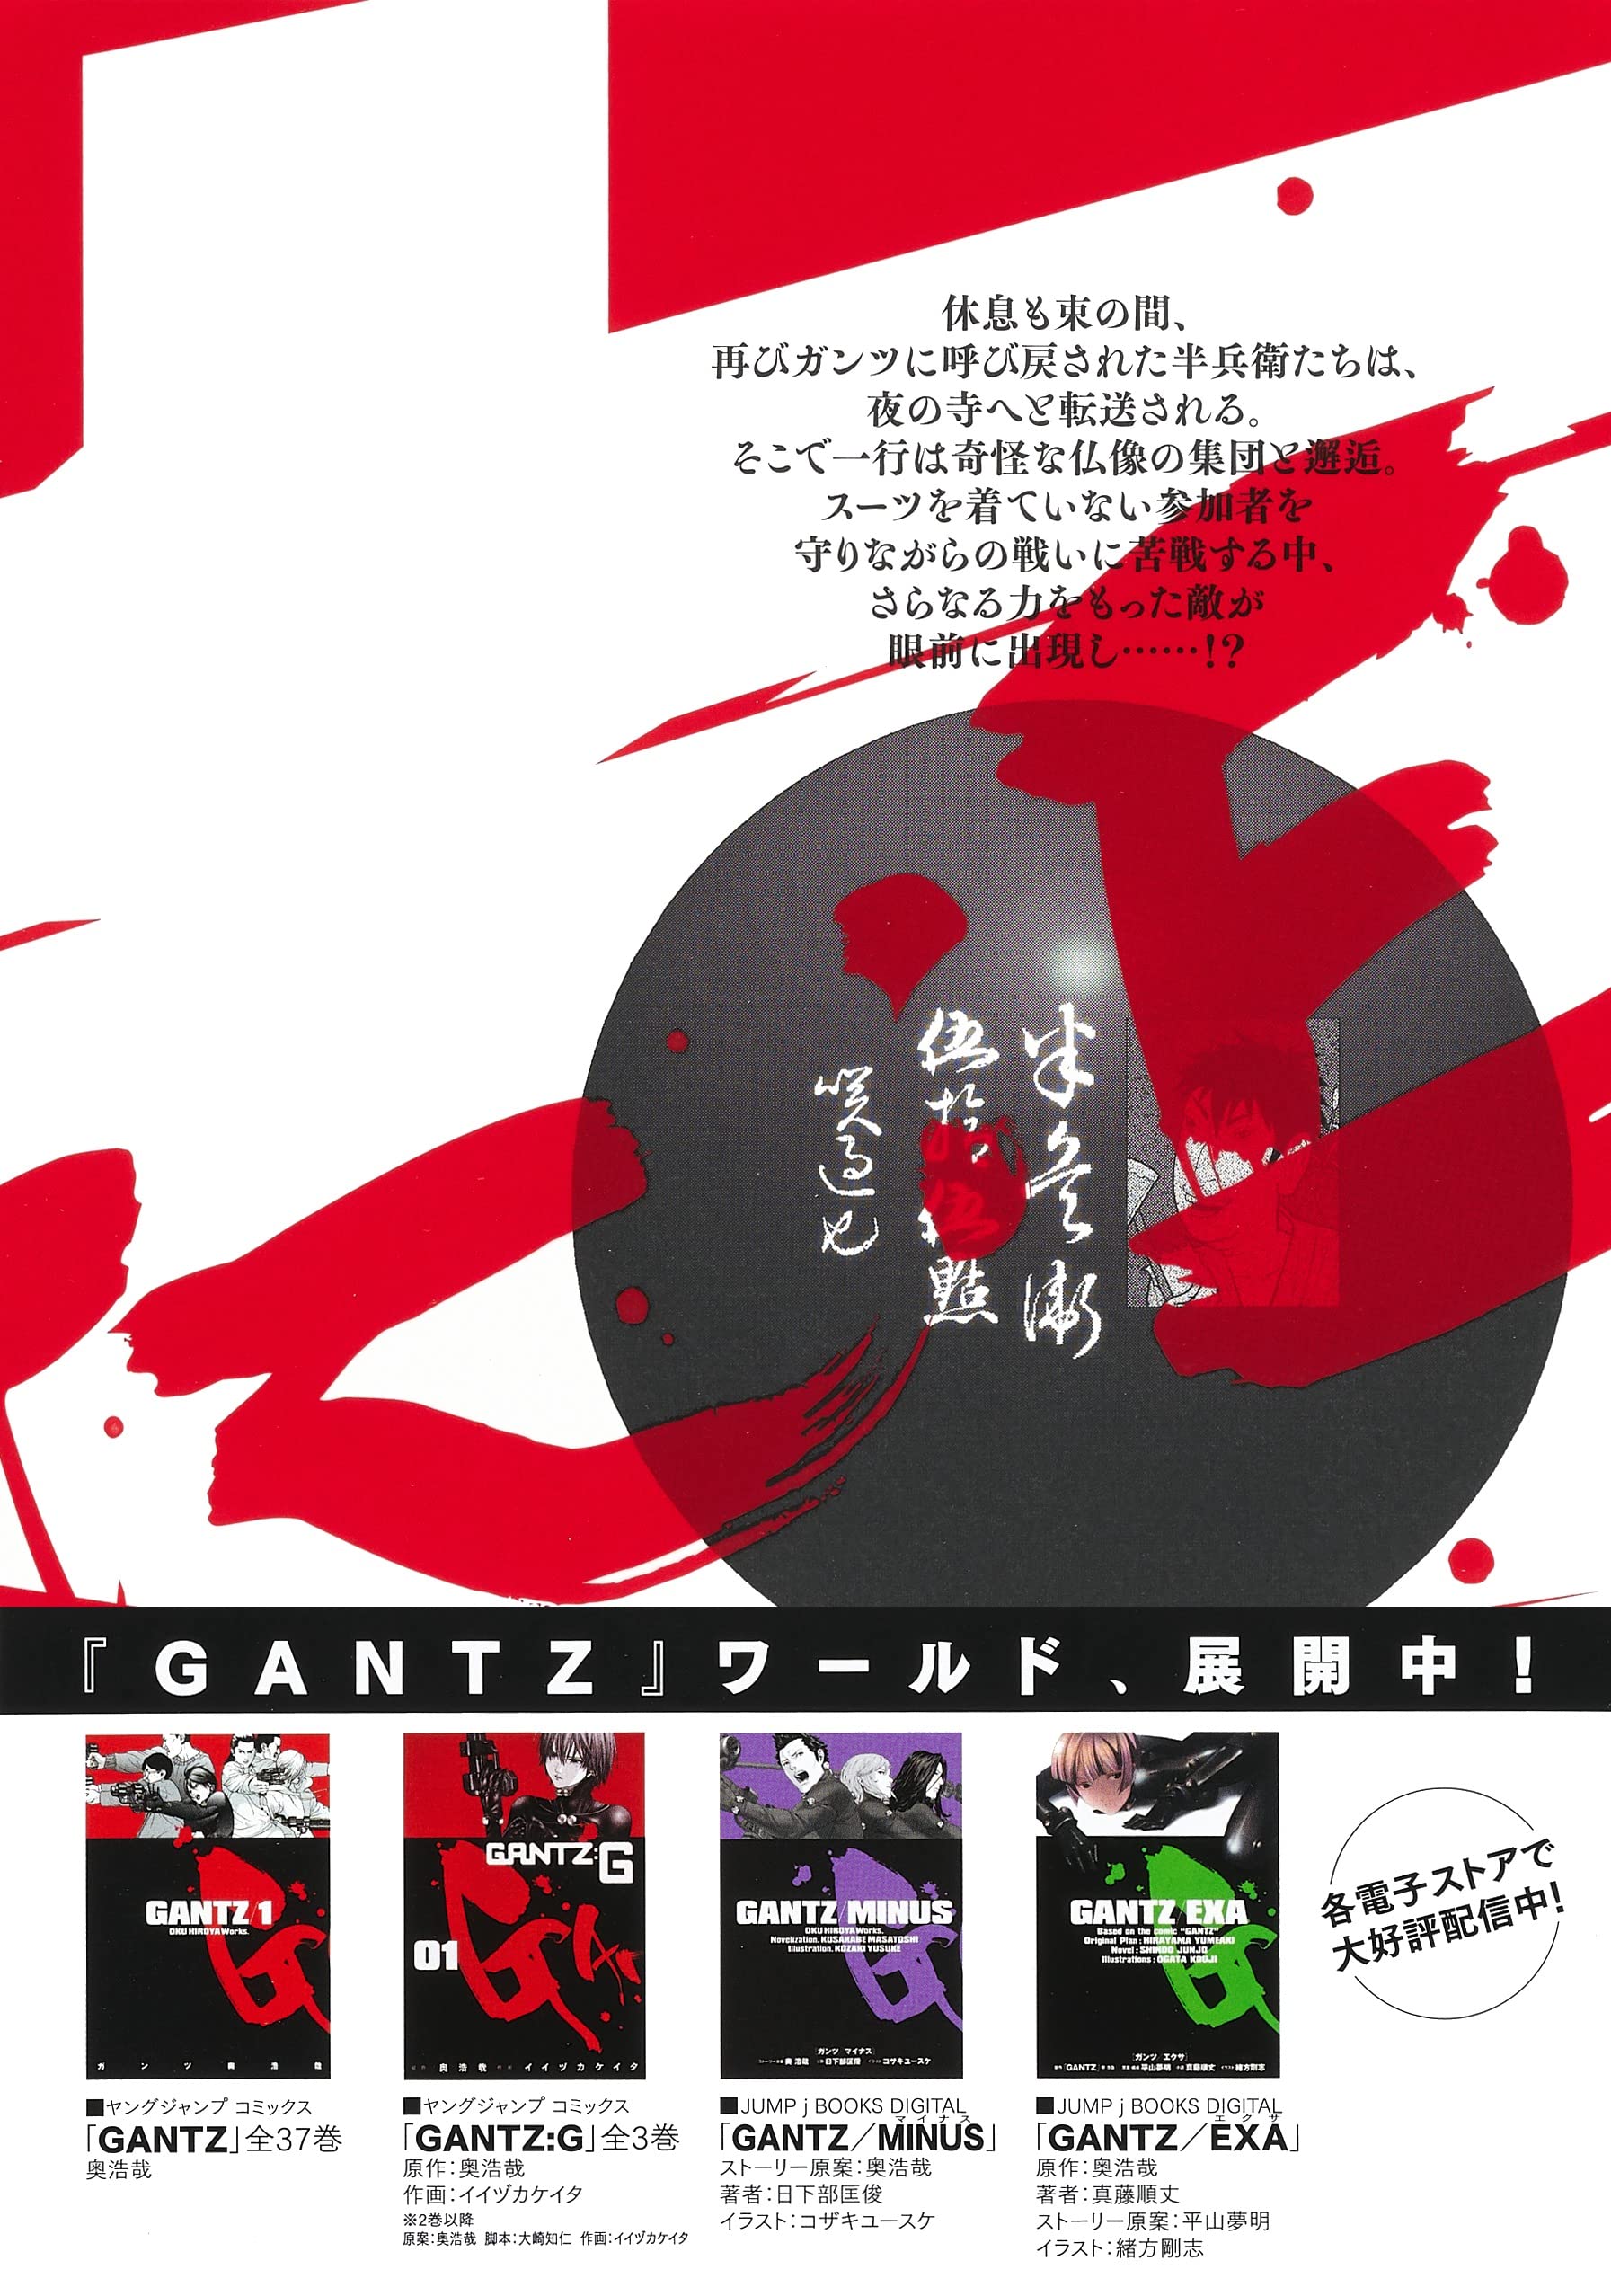 GANTZ:E 4 – Japanese Book Store